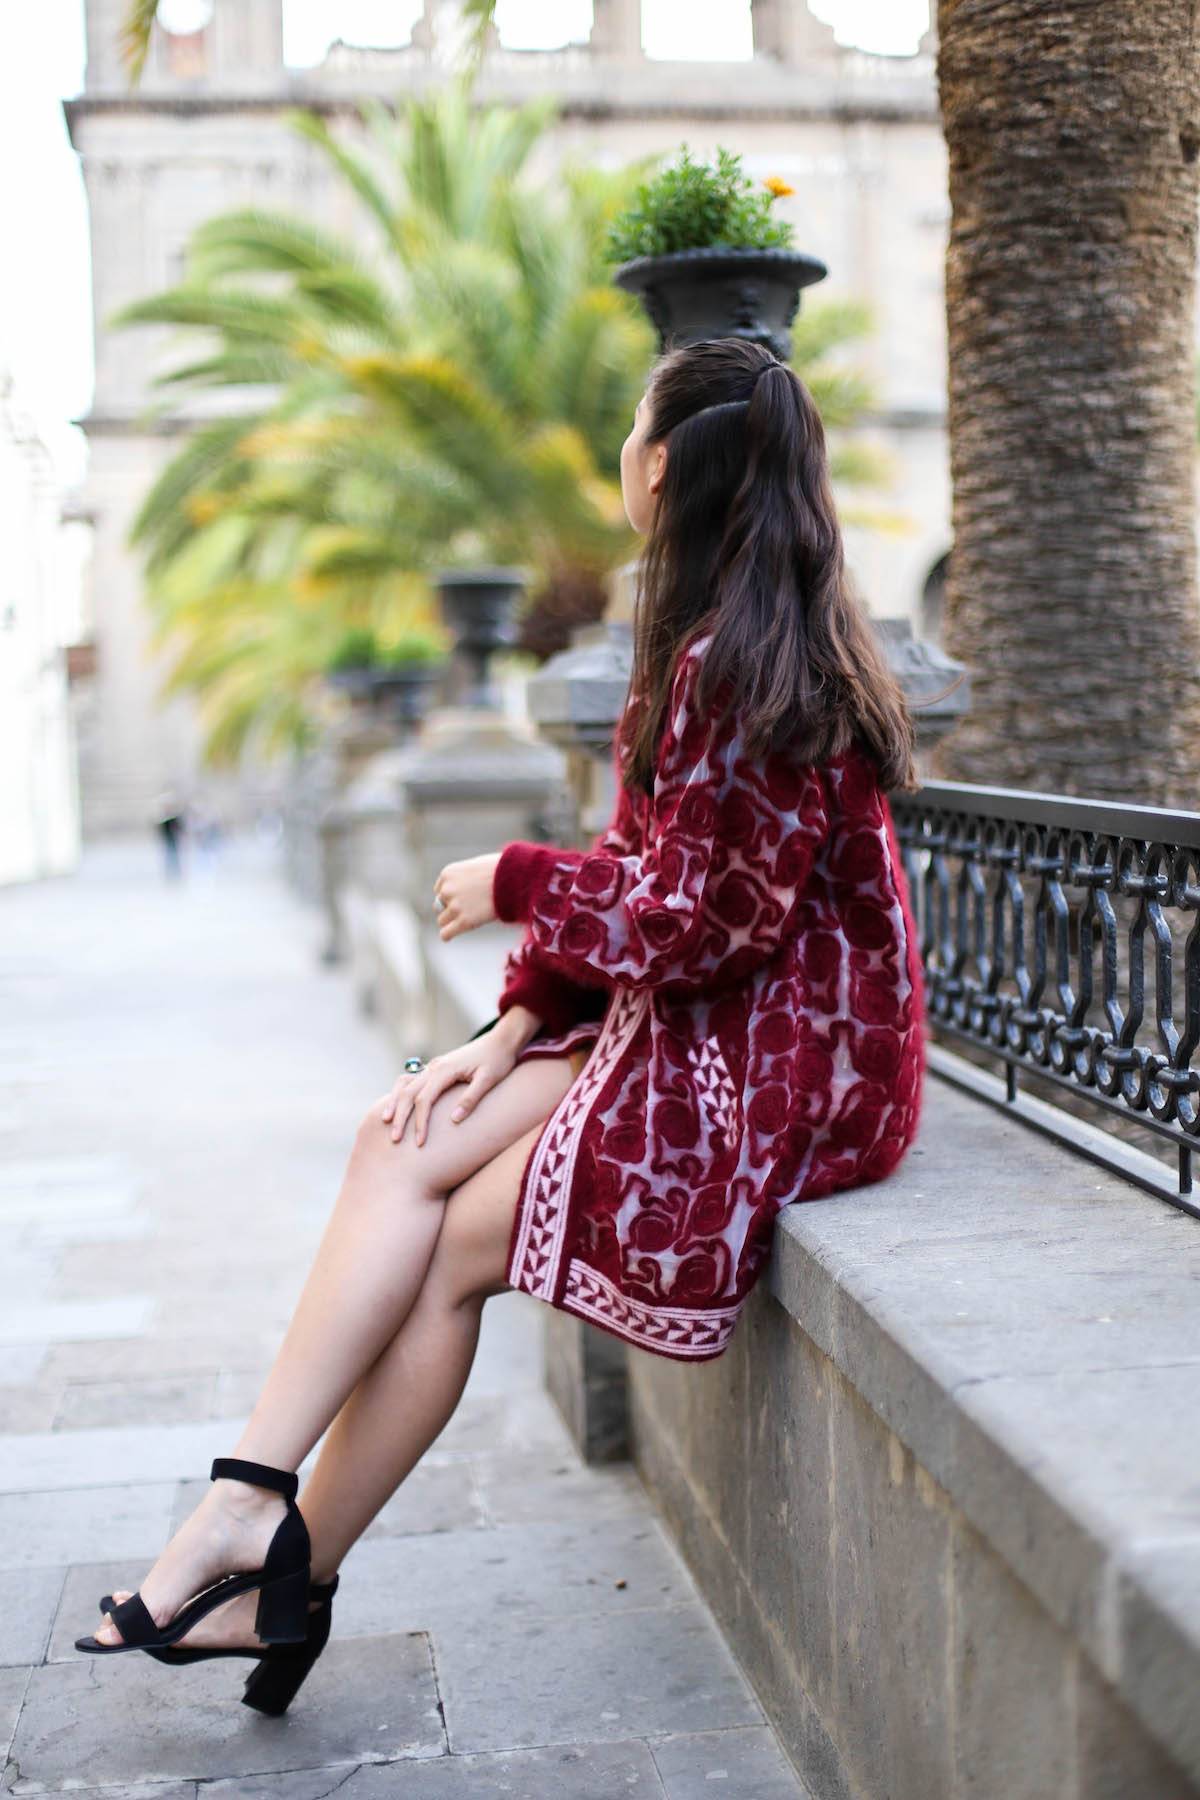 Patterned - Summer Coat - Angora - Streetstyle Las Palmas - Fashionblog München - Tanned Legs - Half Top Knot - schwarze Sandaletten - Vintage Bag